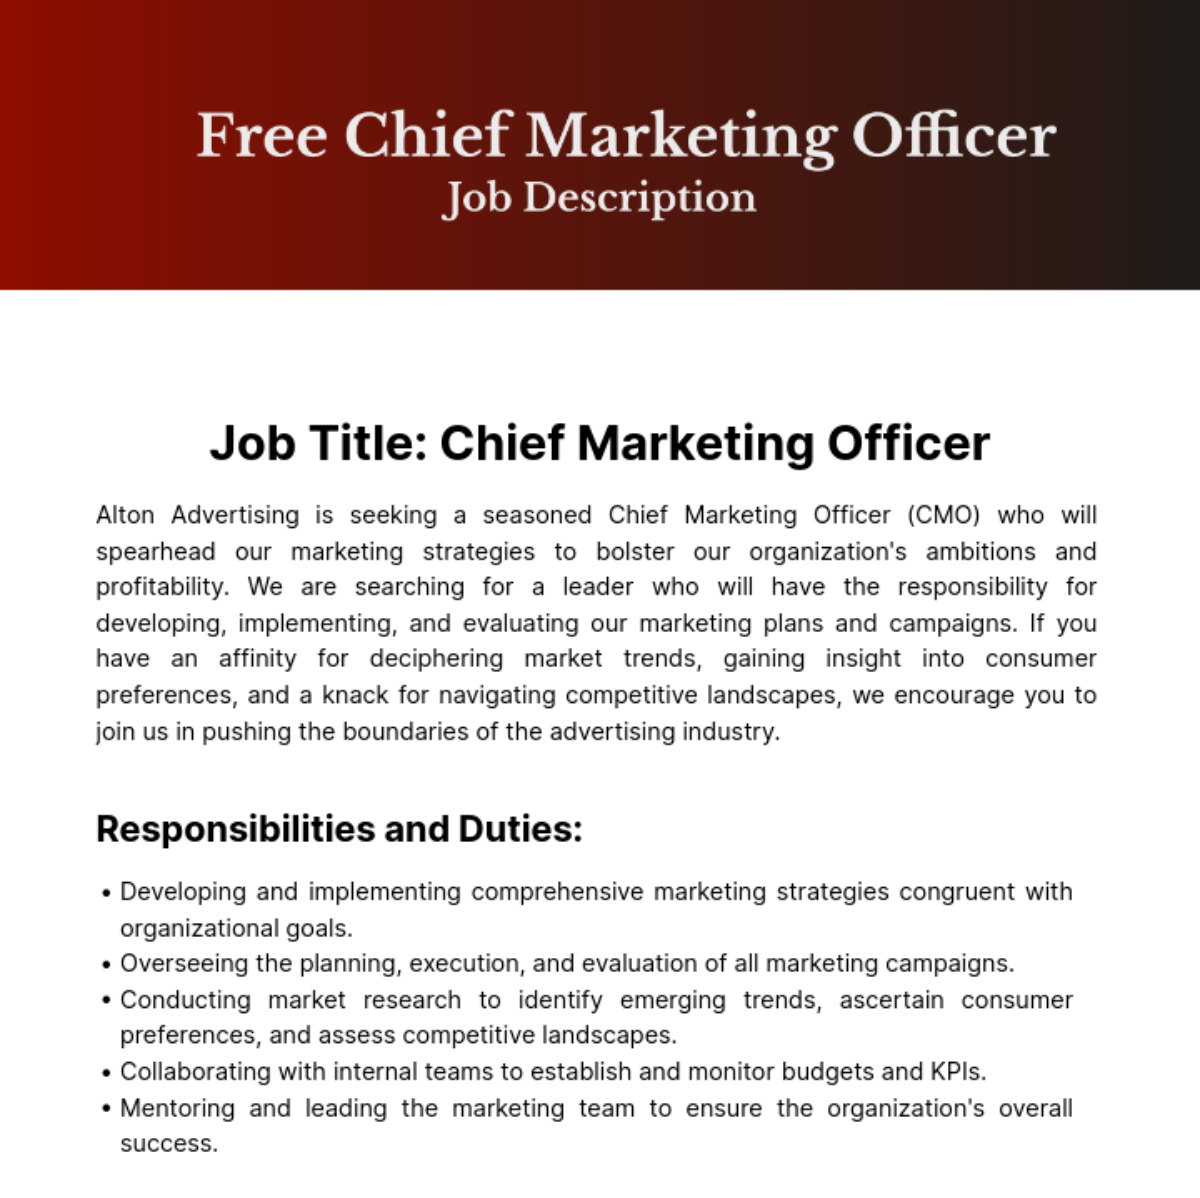 Chief Marketing Officer Job Description Template